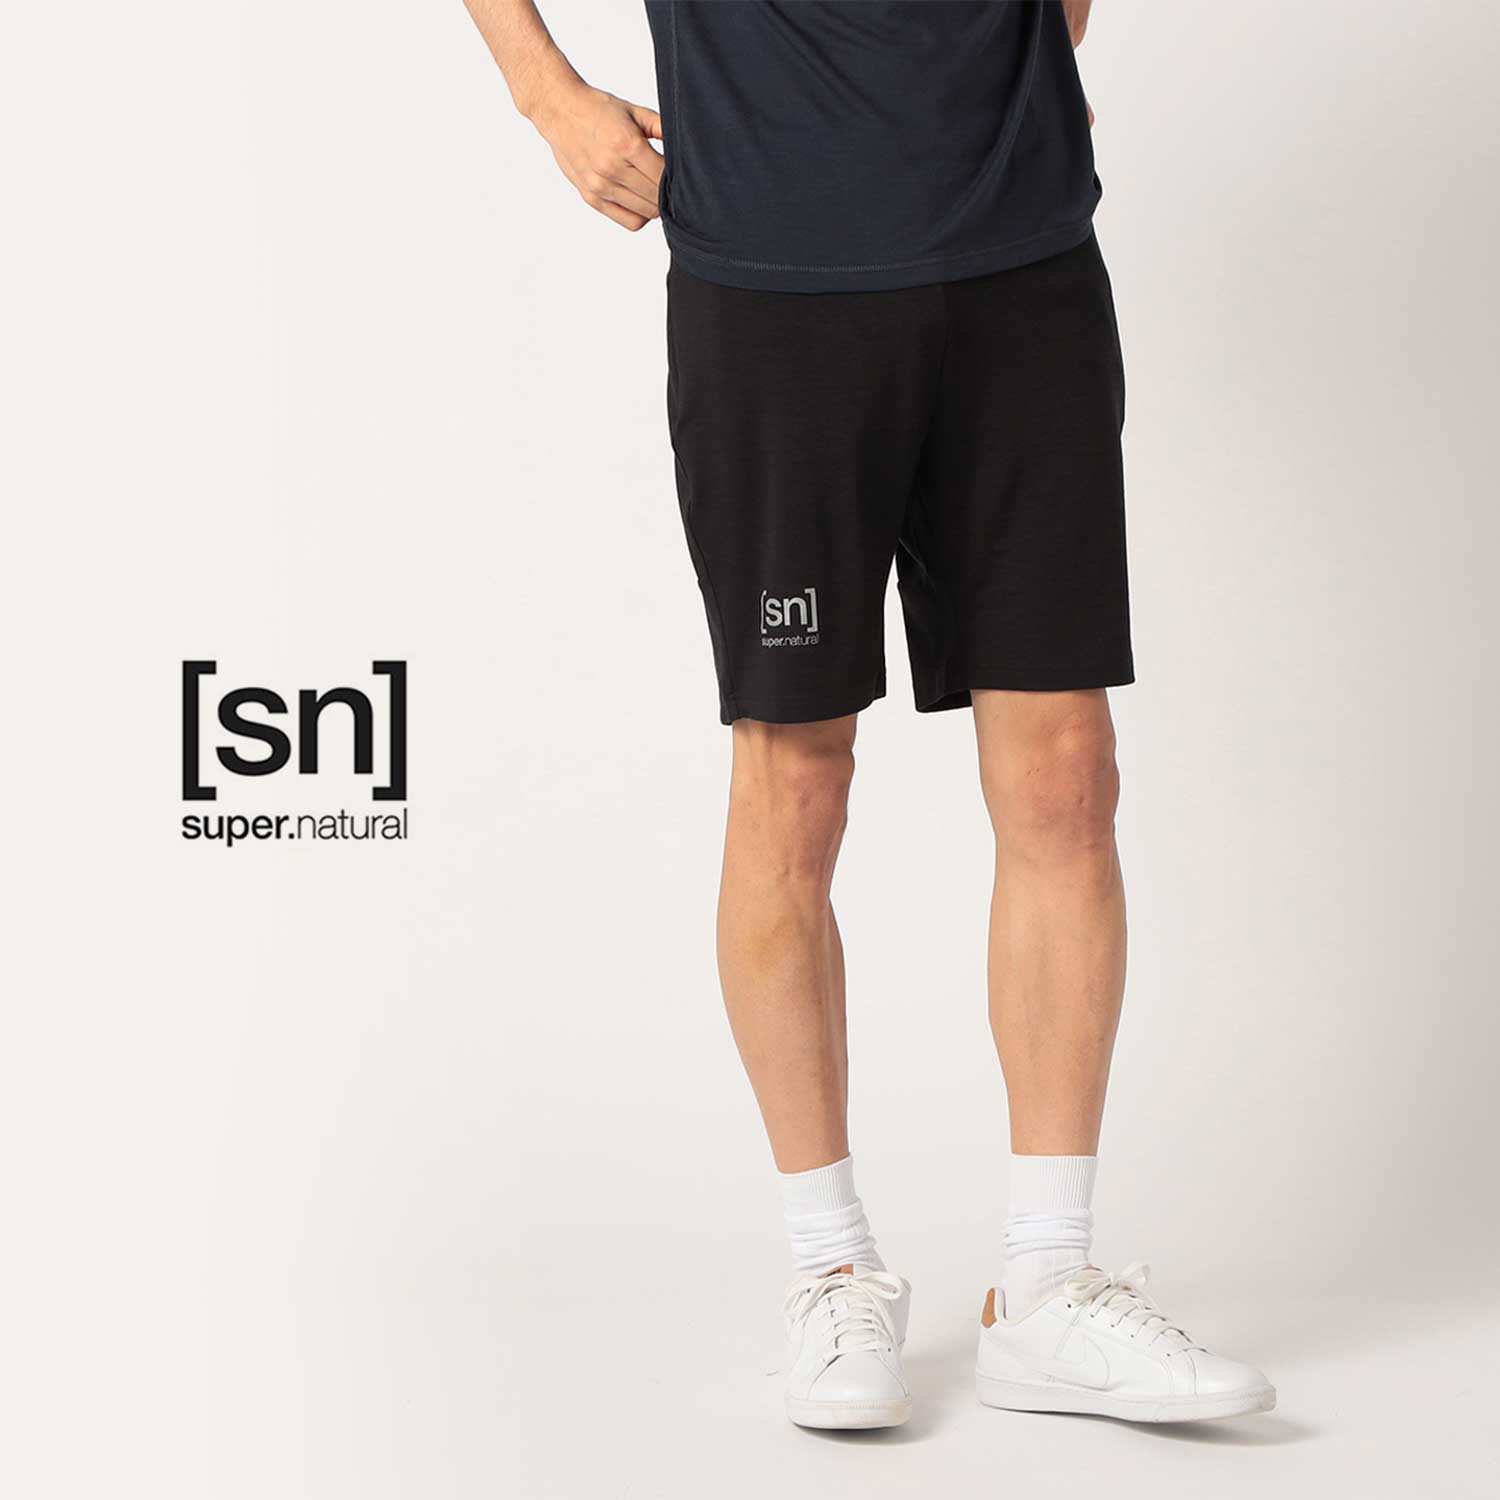 sn] super.natural] Movement Shorts Supernatural Men's Yogawear